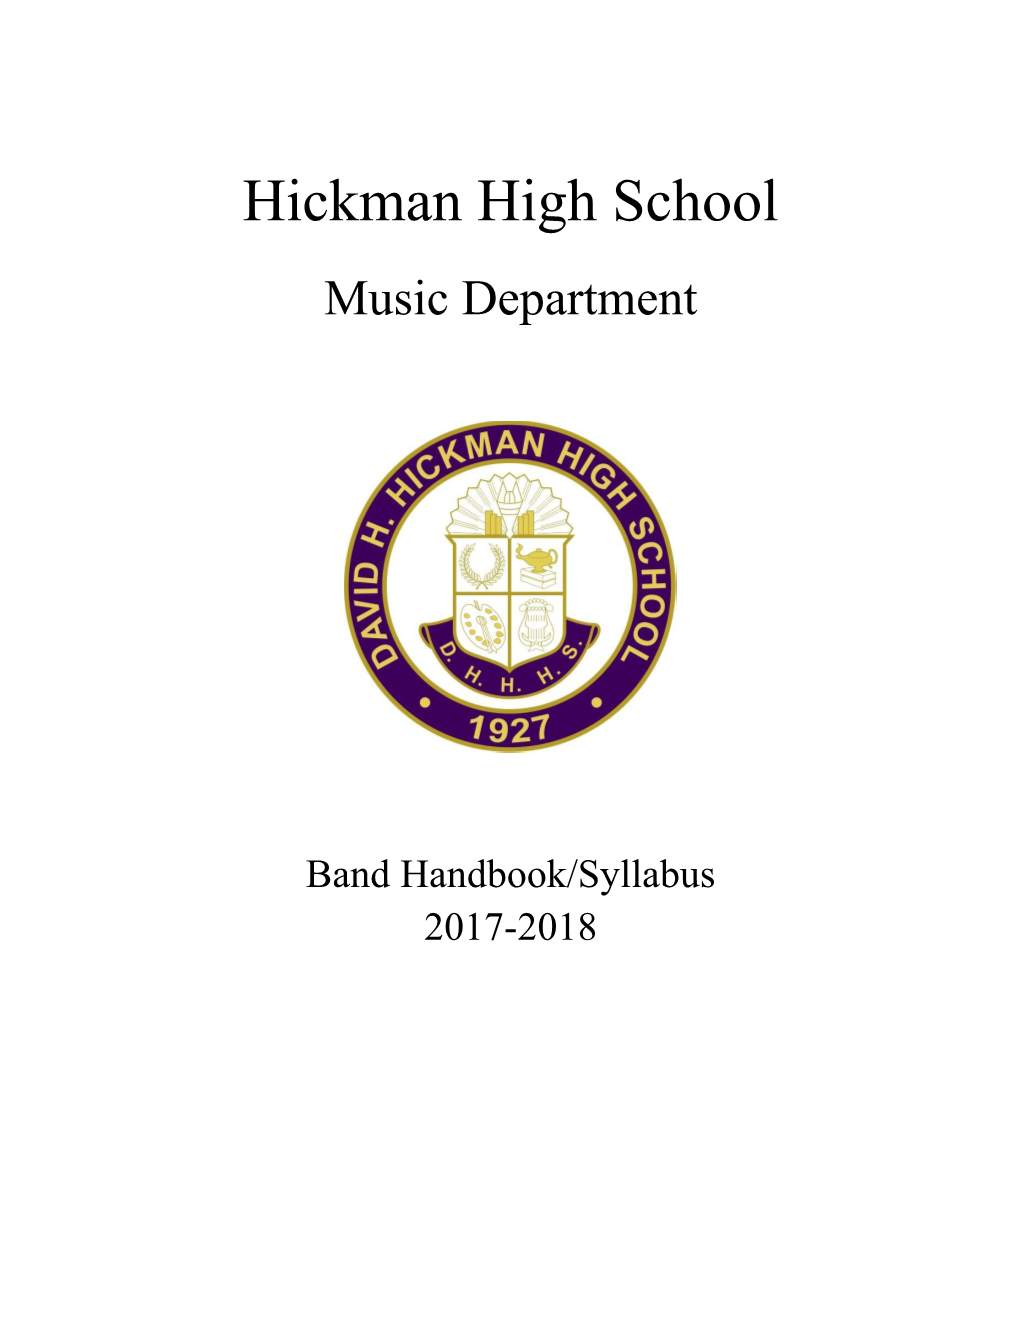 Hickman High School Instrumental Music